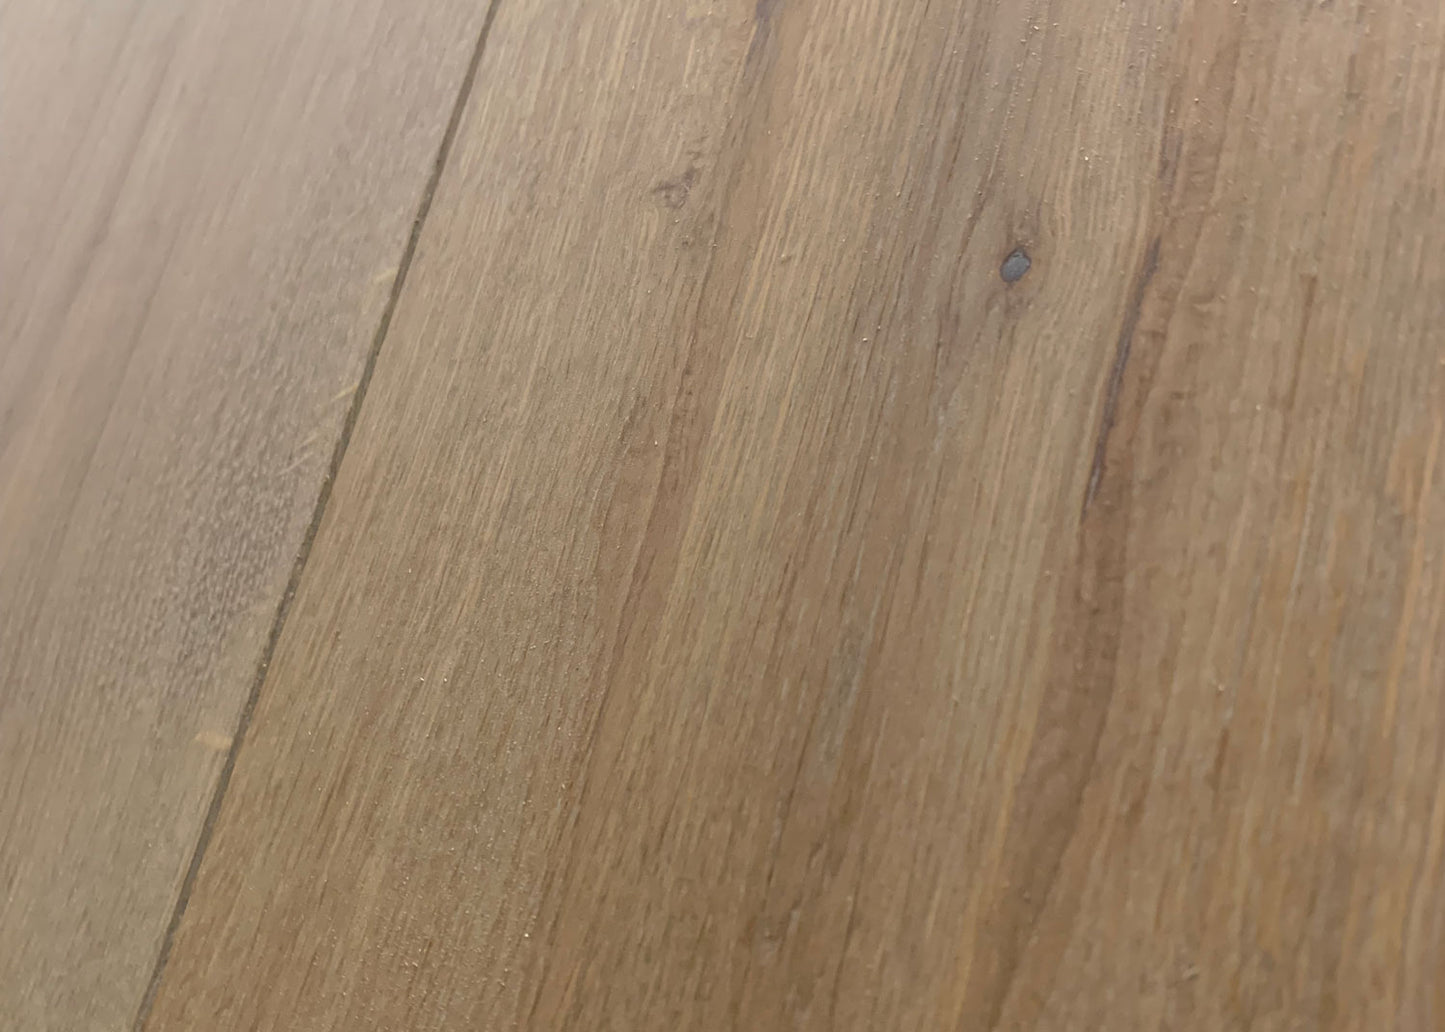 Washed Grey Chateau Oak | Engineered Oak Wood Flooring